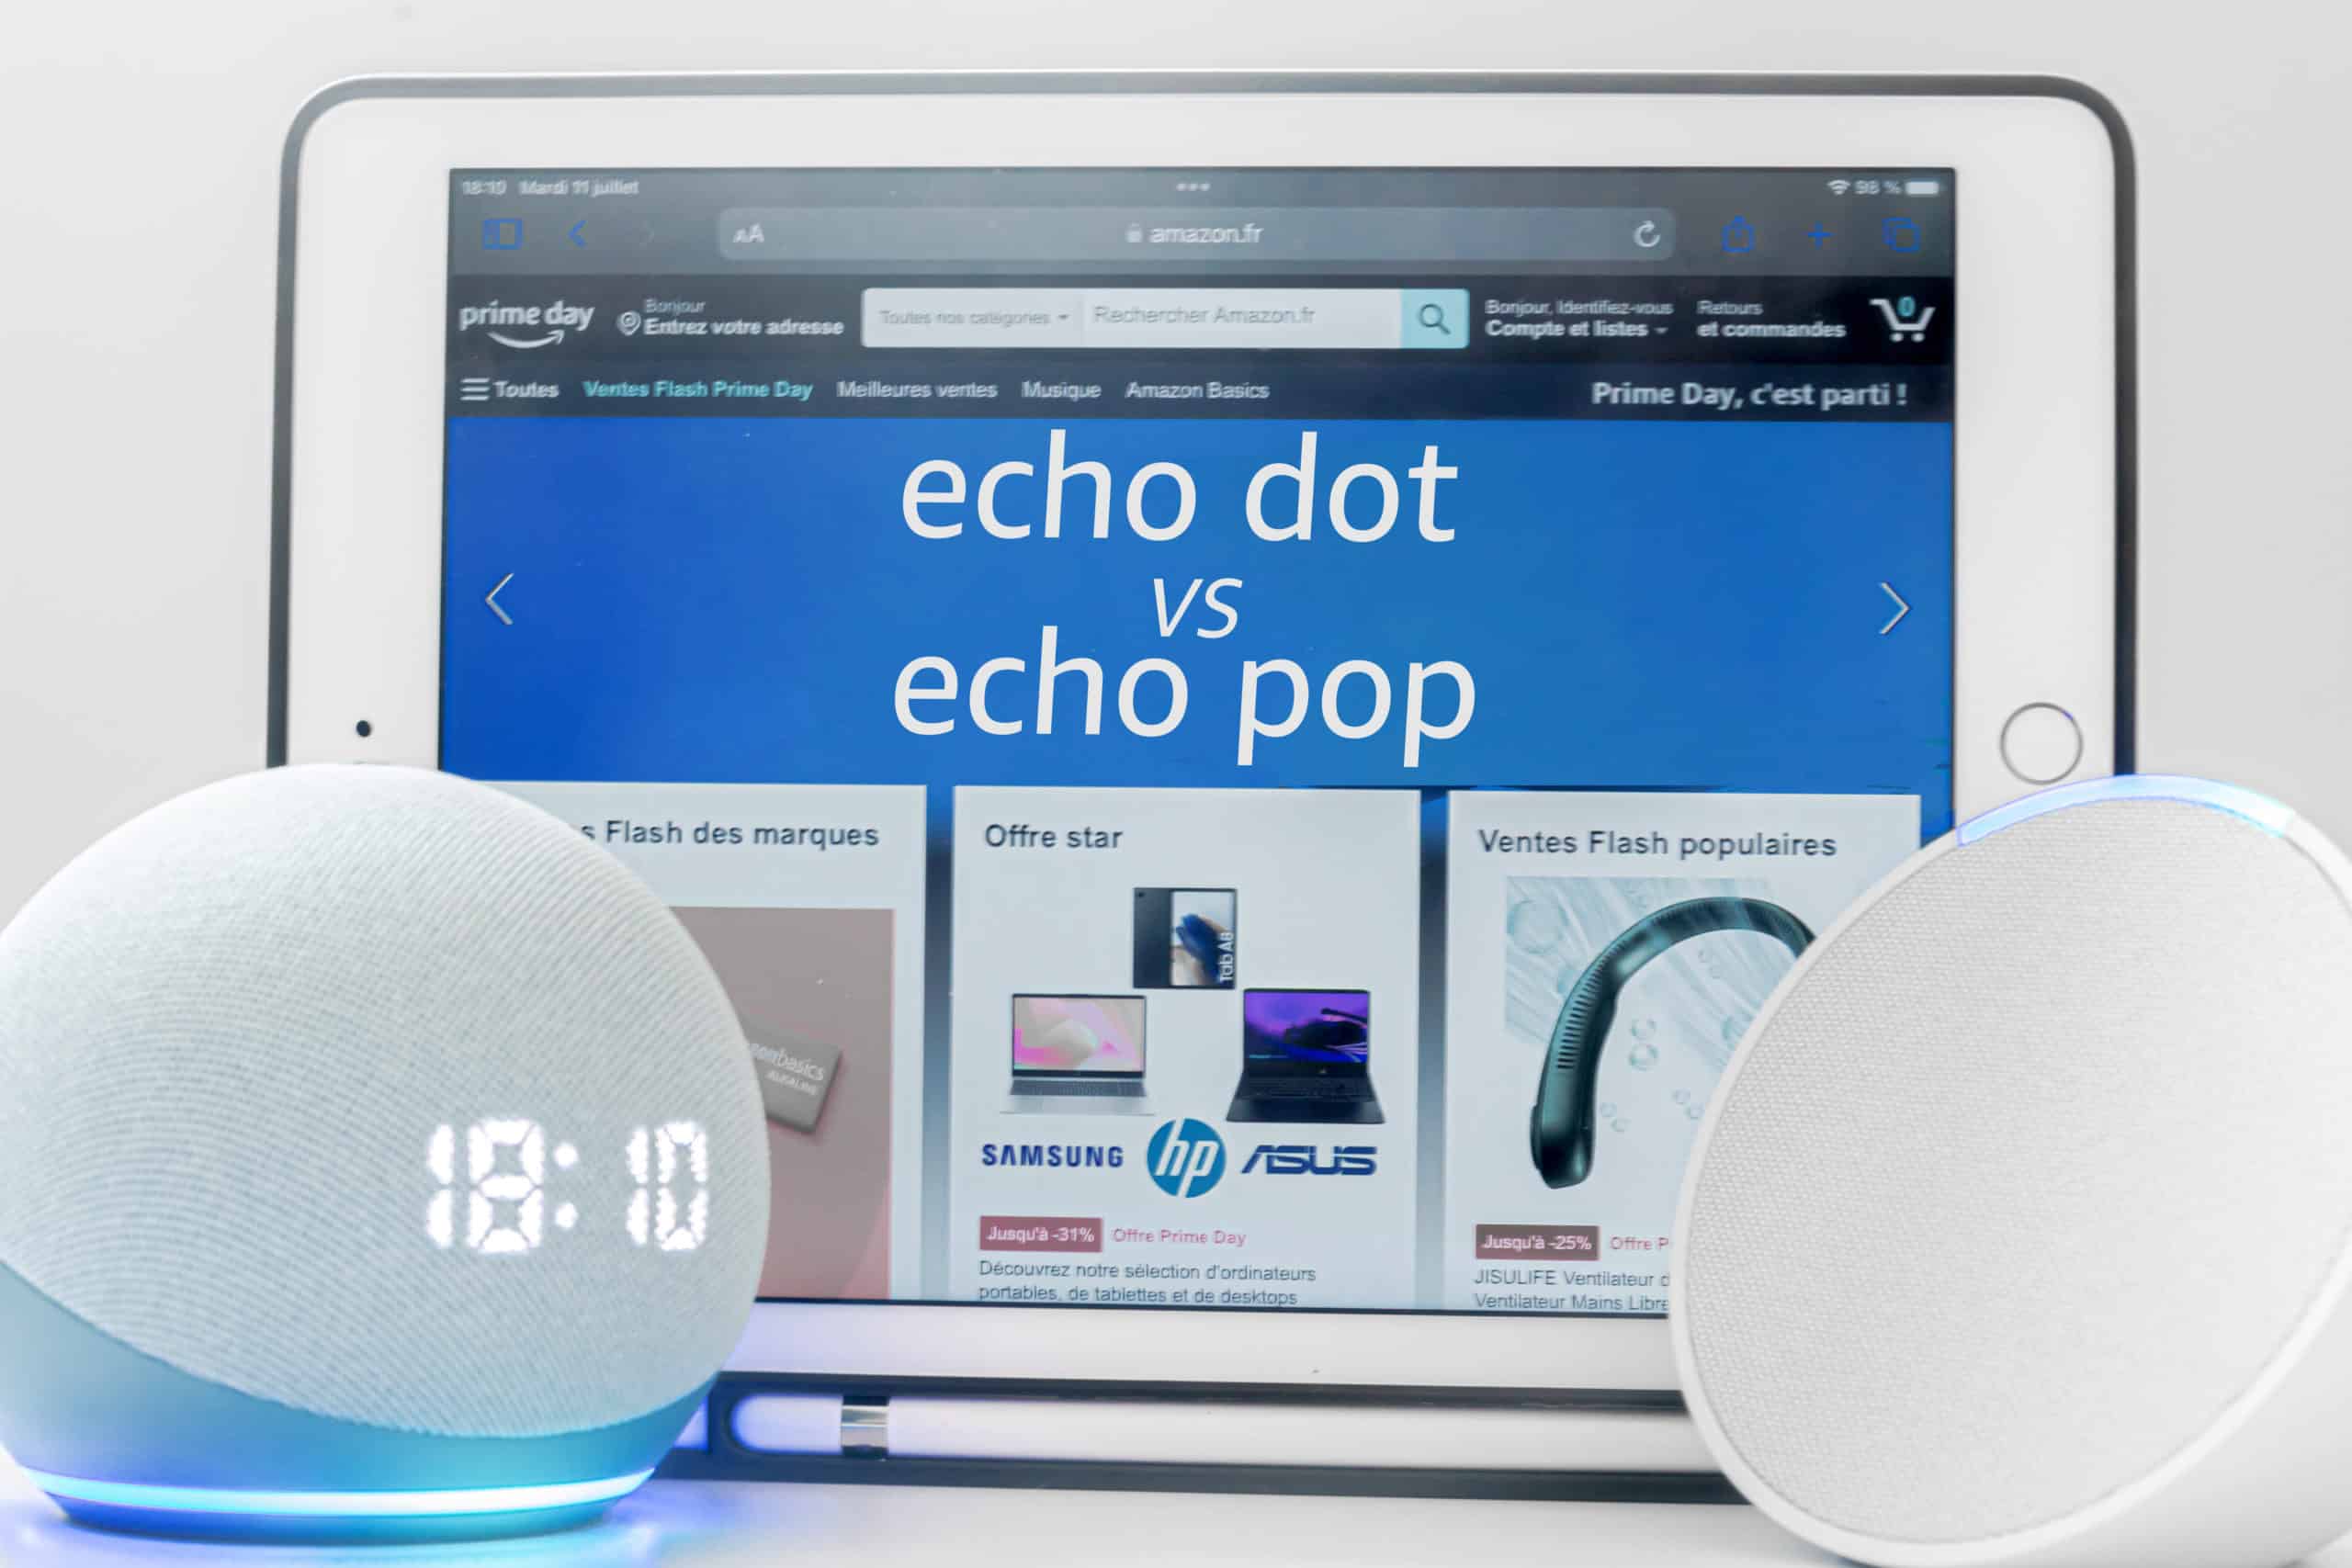 Enceinte Echo avec Alexa – Achat en ligne - AliExpress